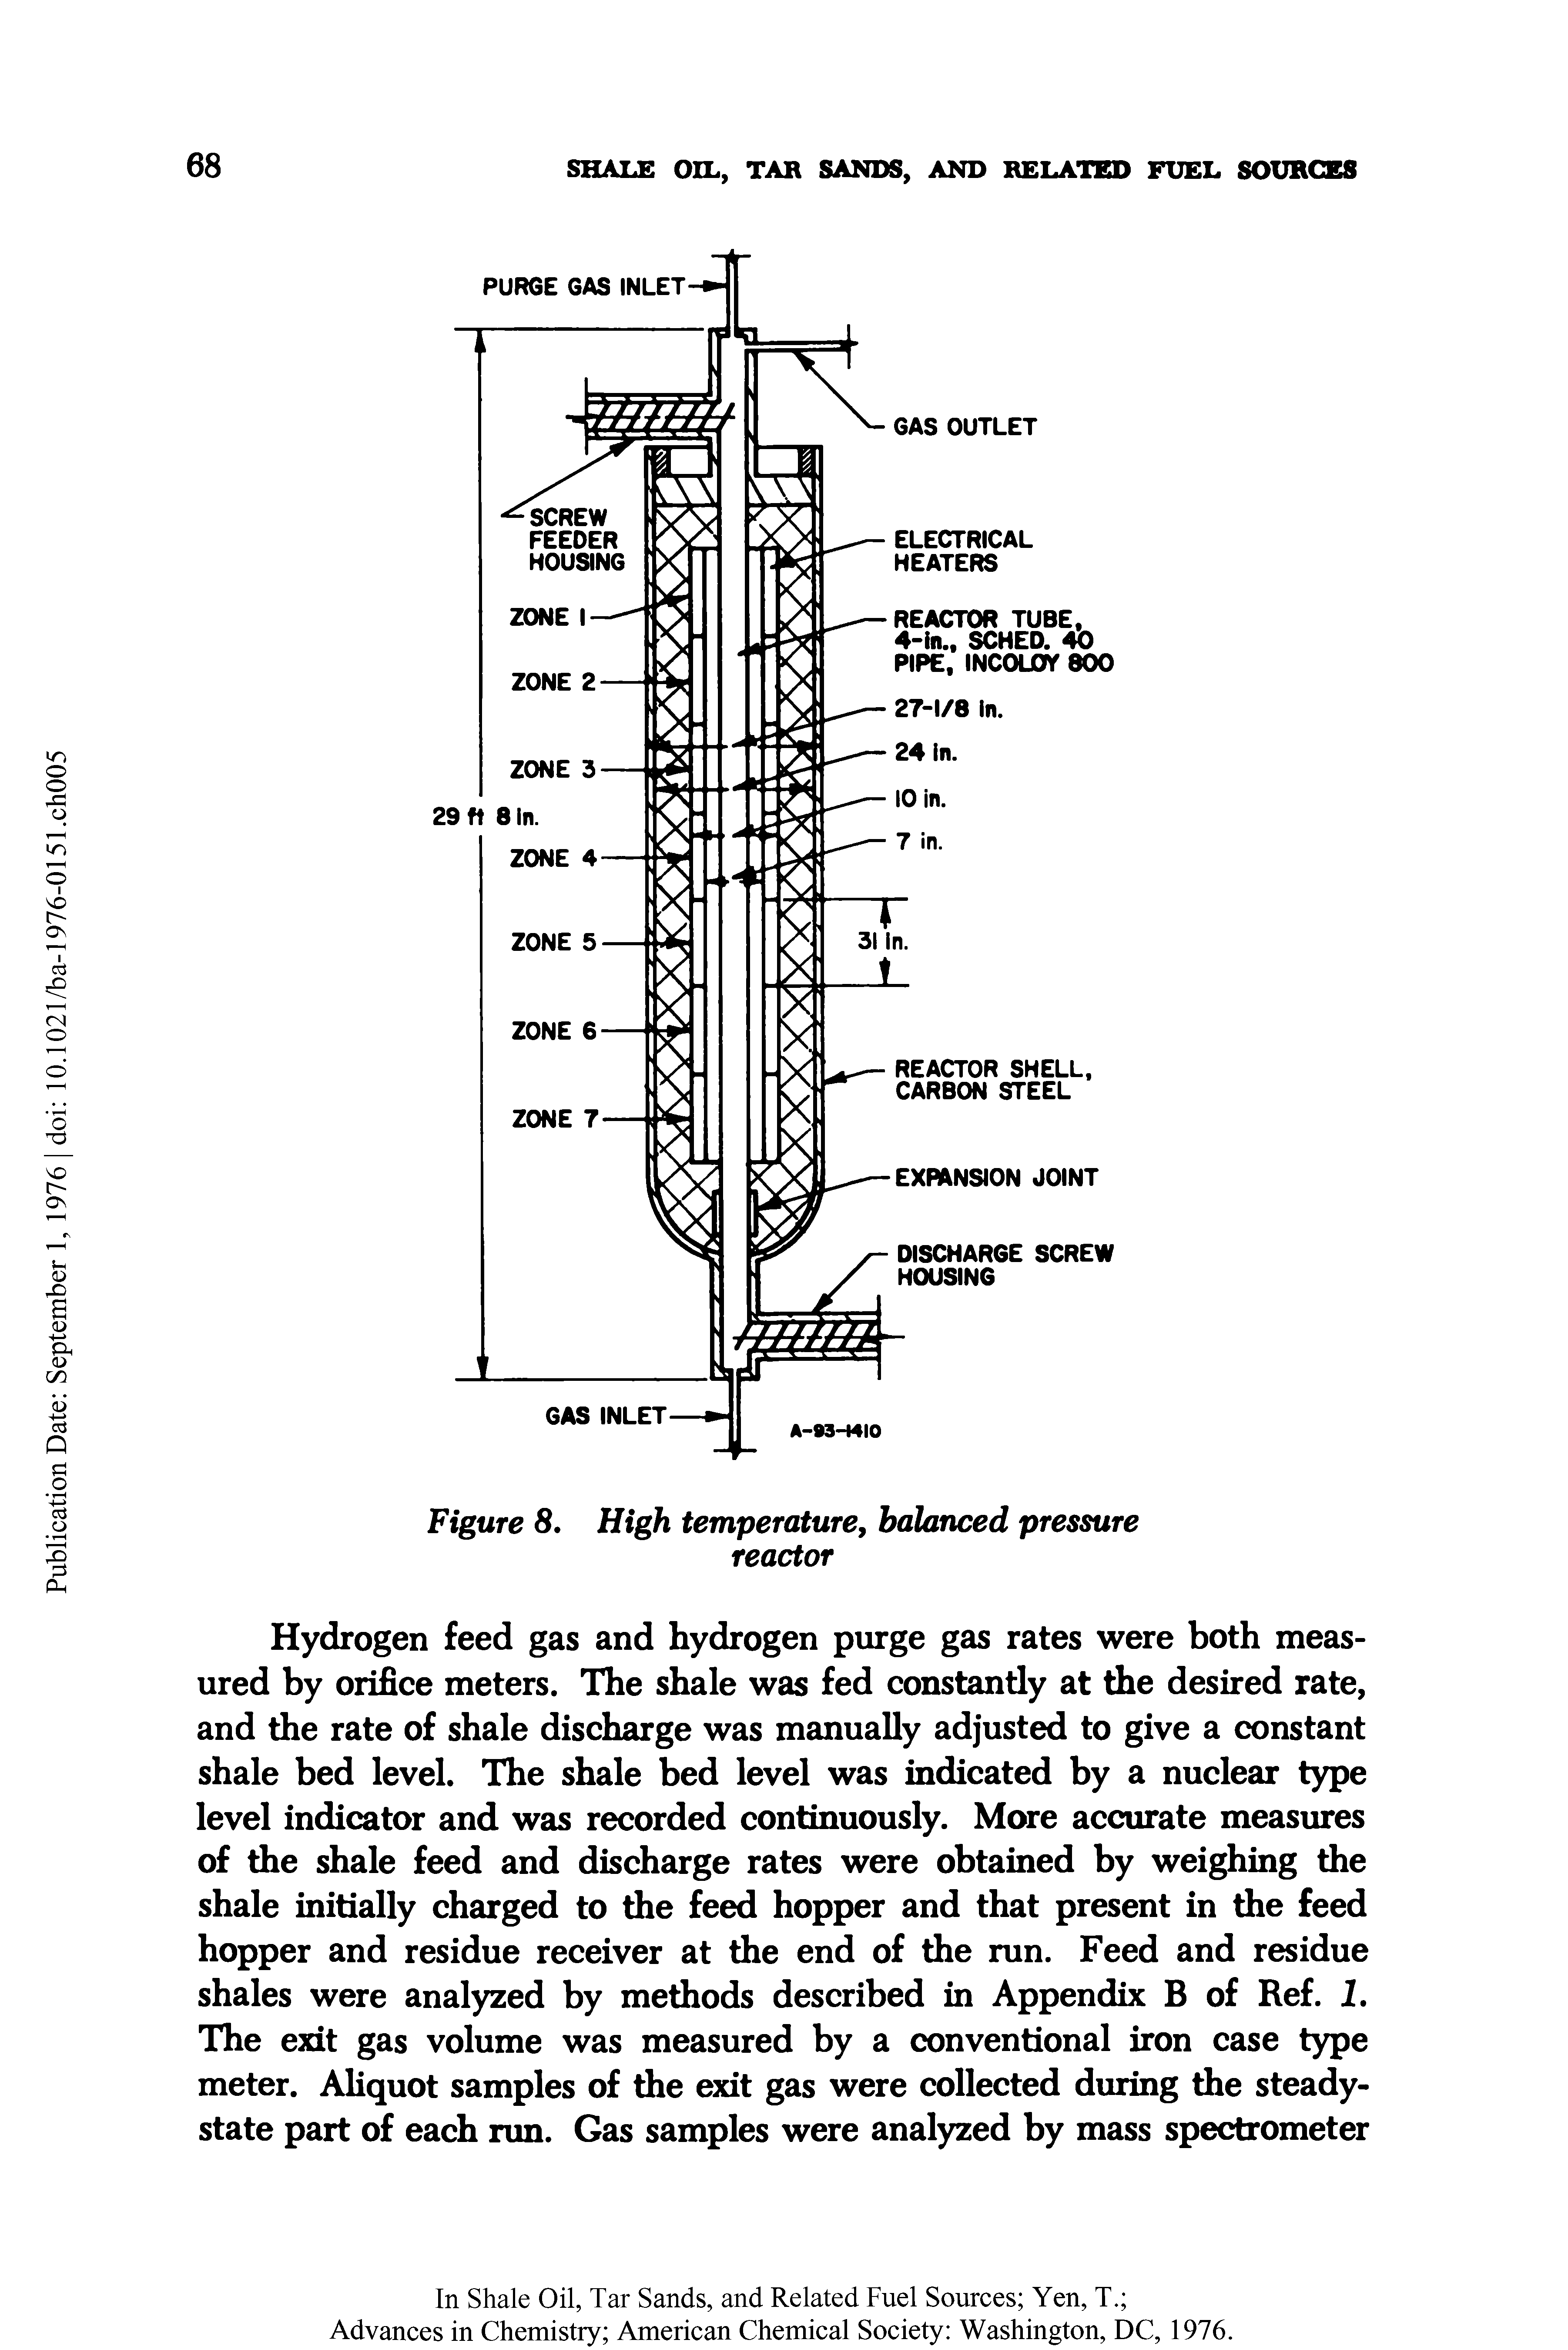 Figure 8. High temperature, balanced pressure reactor...